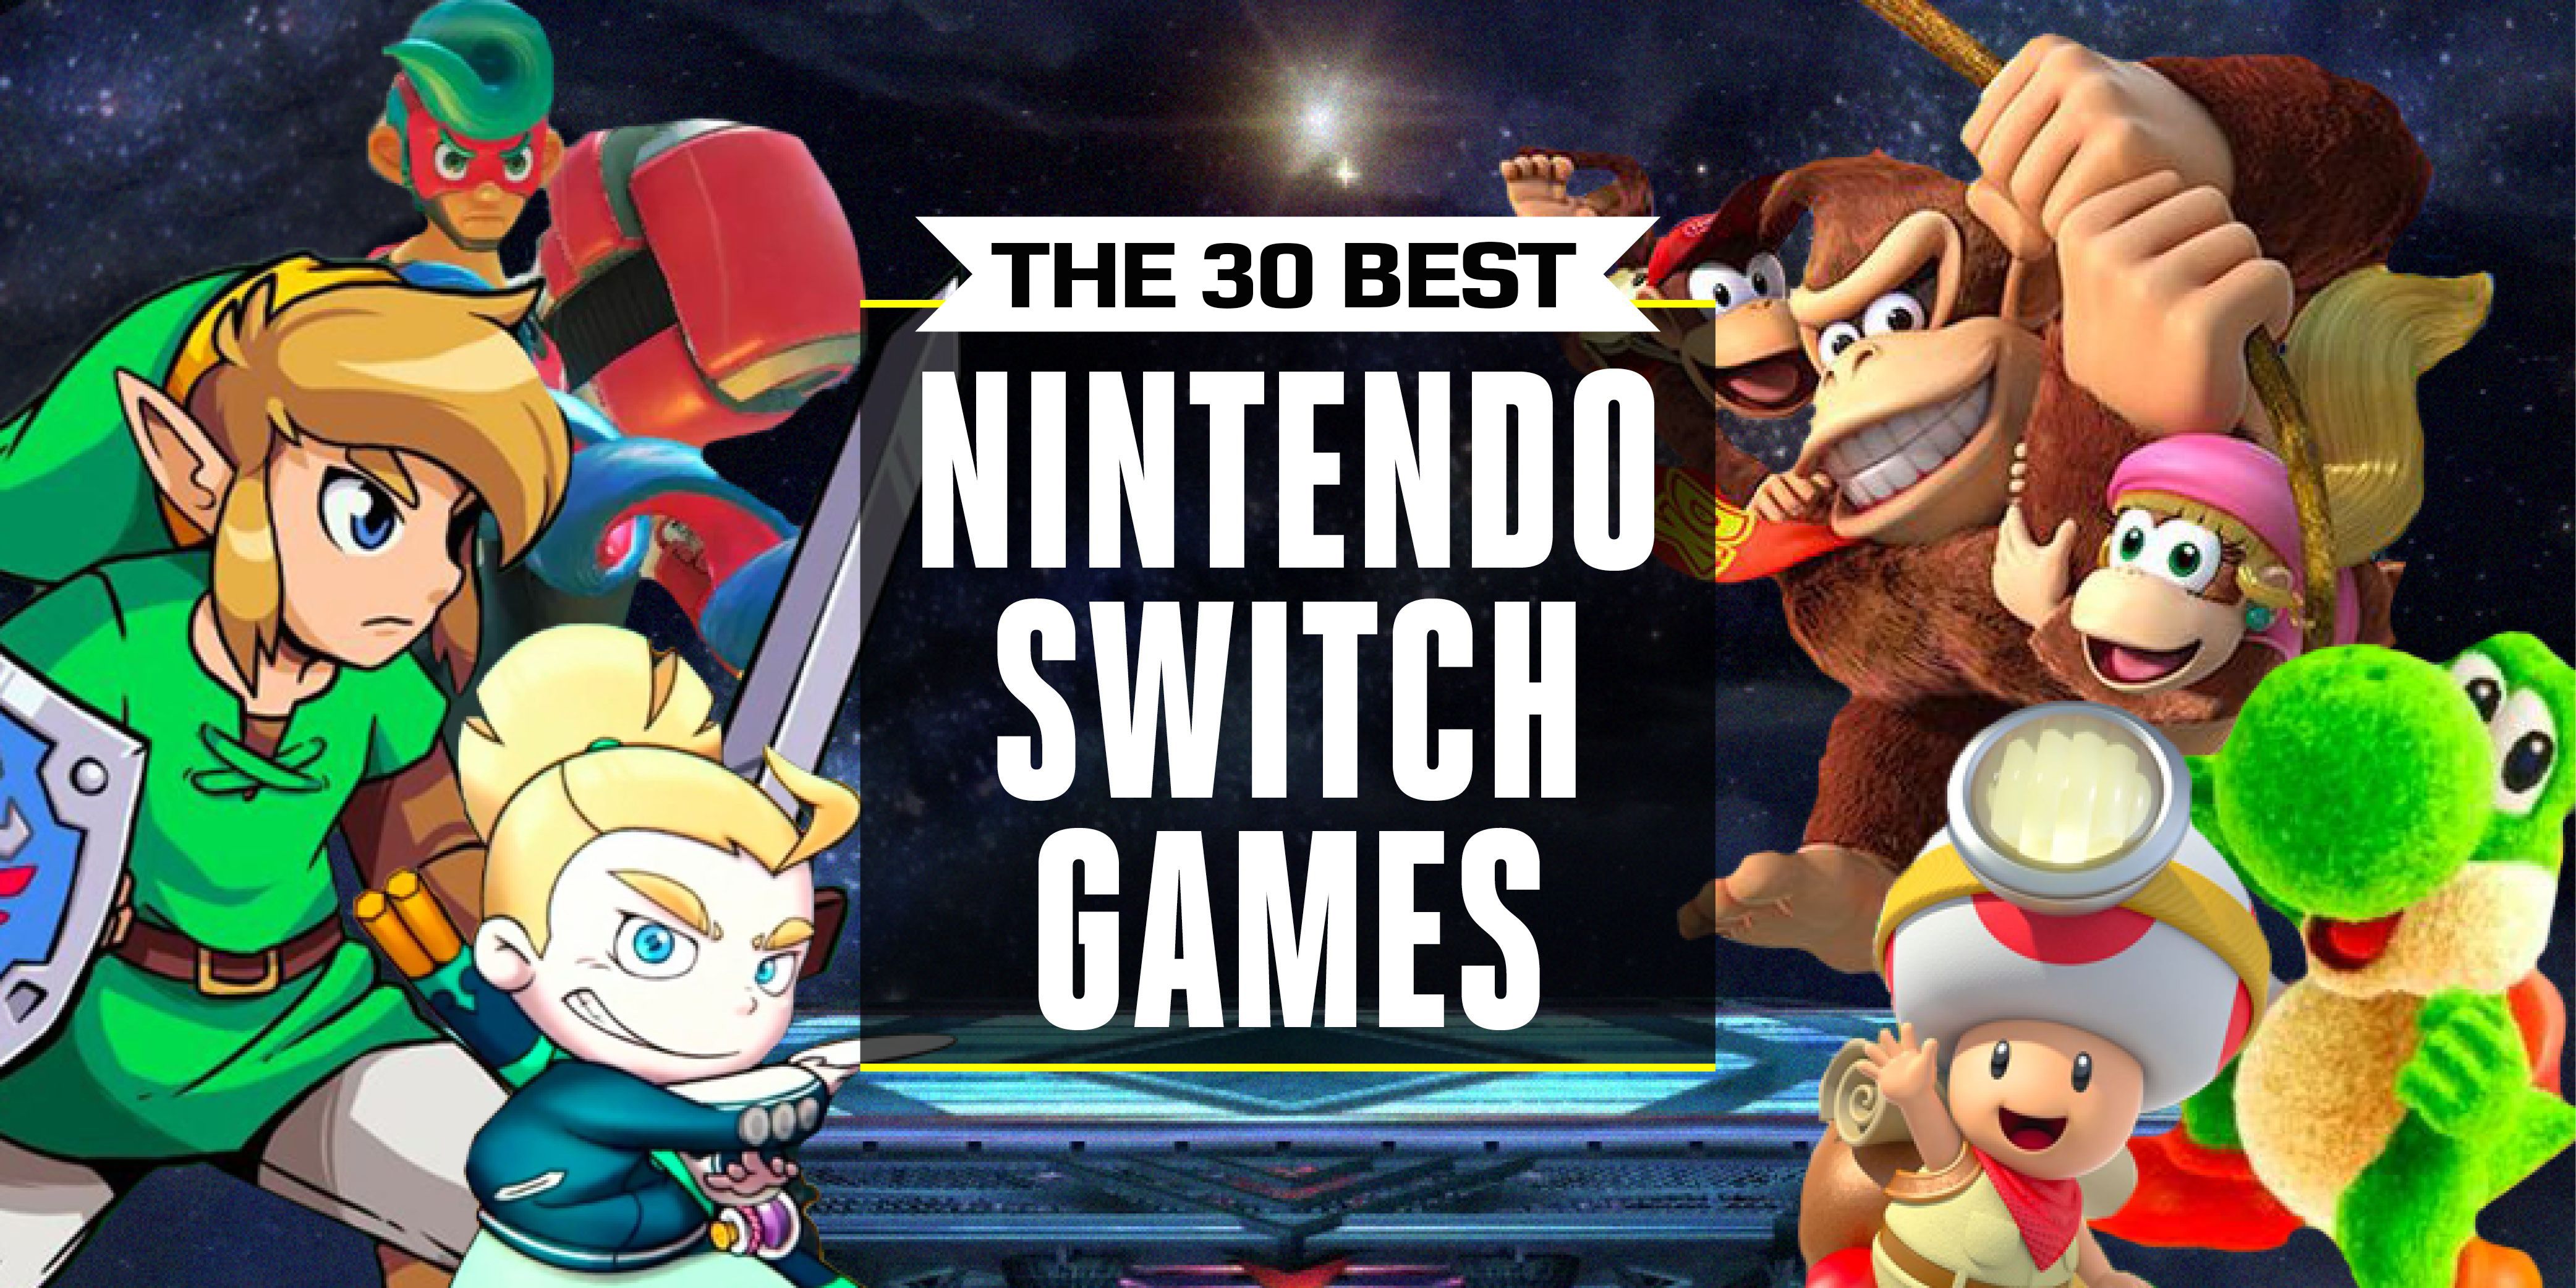 19 Best Nintendo Switch Games to Buy in 2020